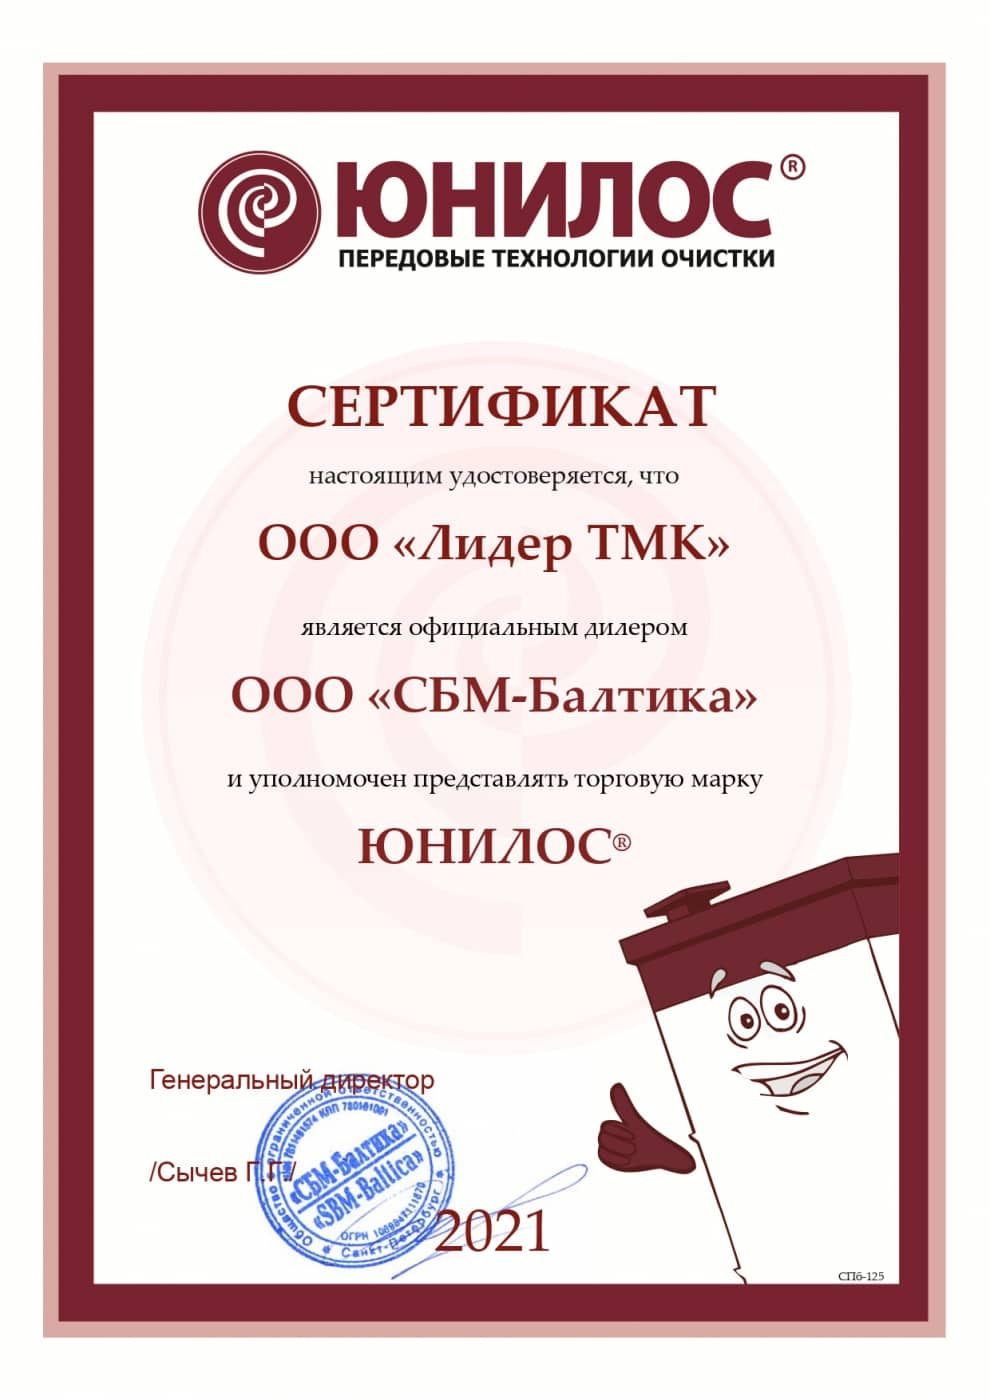 Септик Астра ДАБЛ 5 сертификат